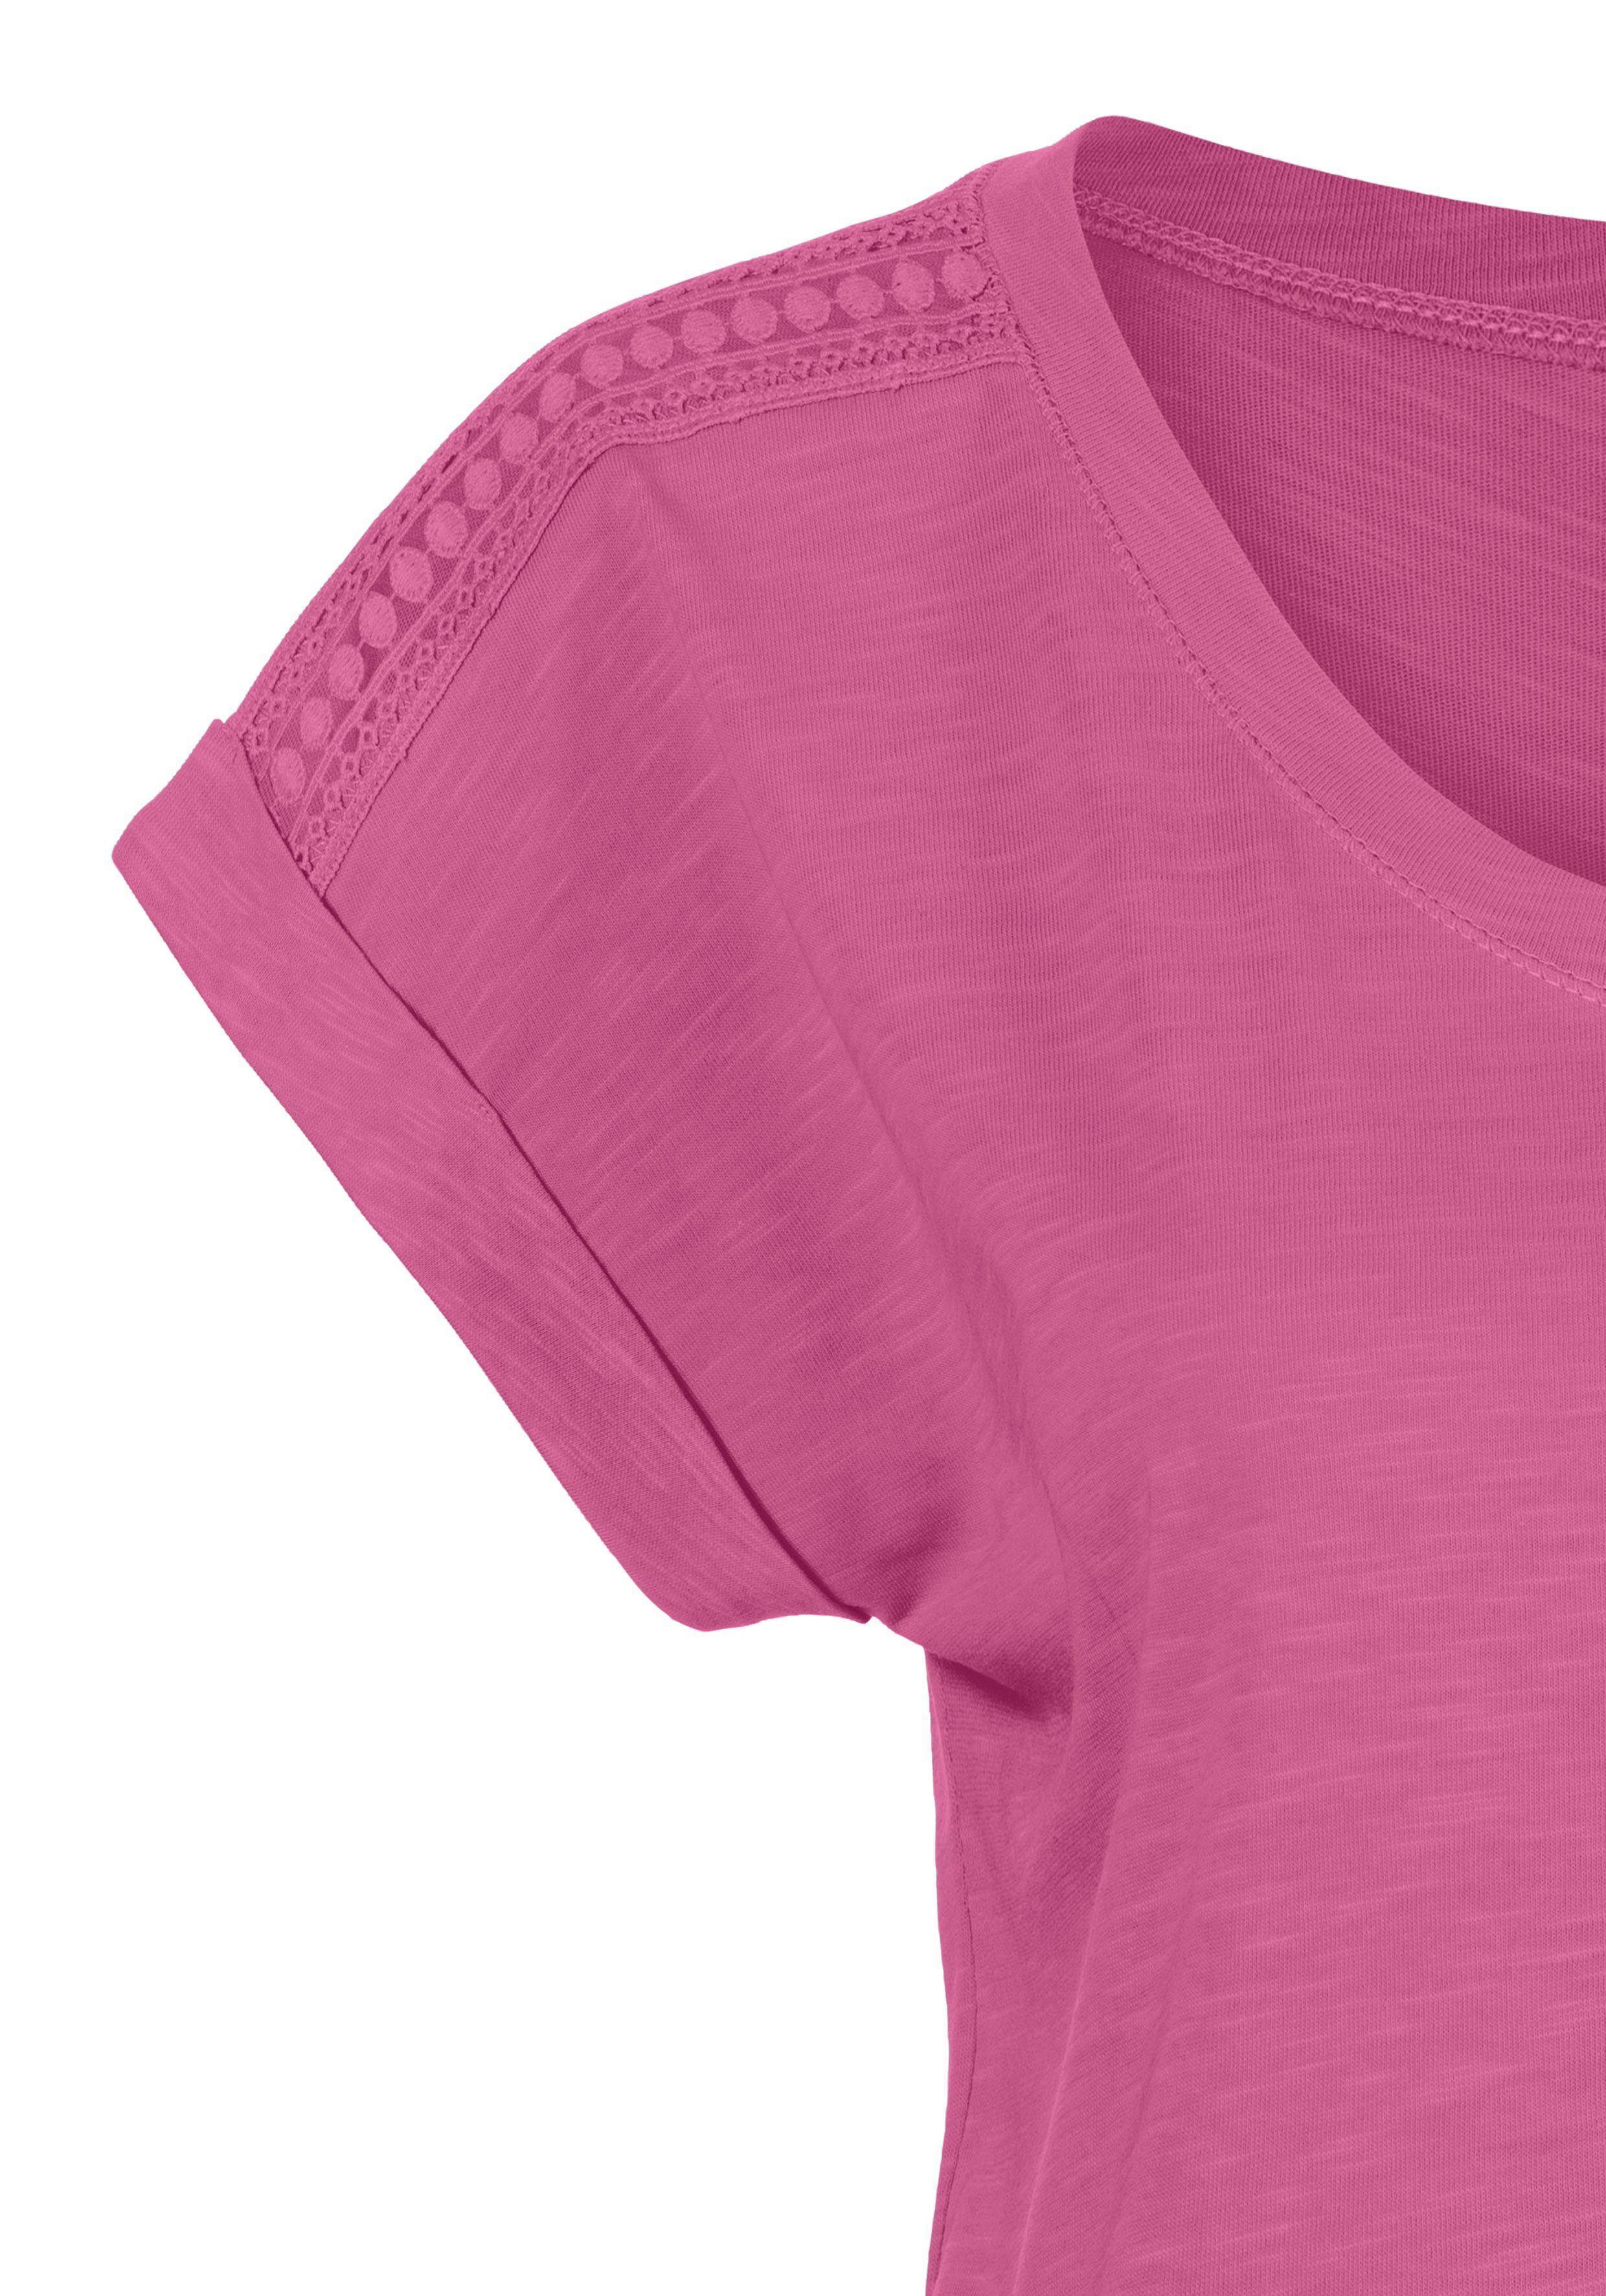 Vivance T-Shirt (Packung, 2er-Pack) mit der Schulter pink, navy Häkelspitze an